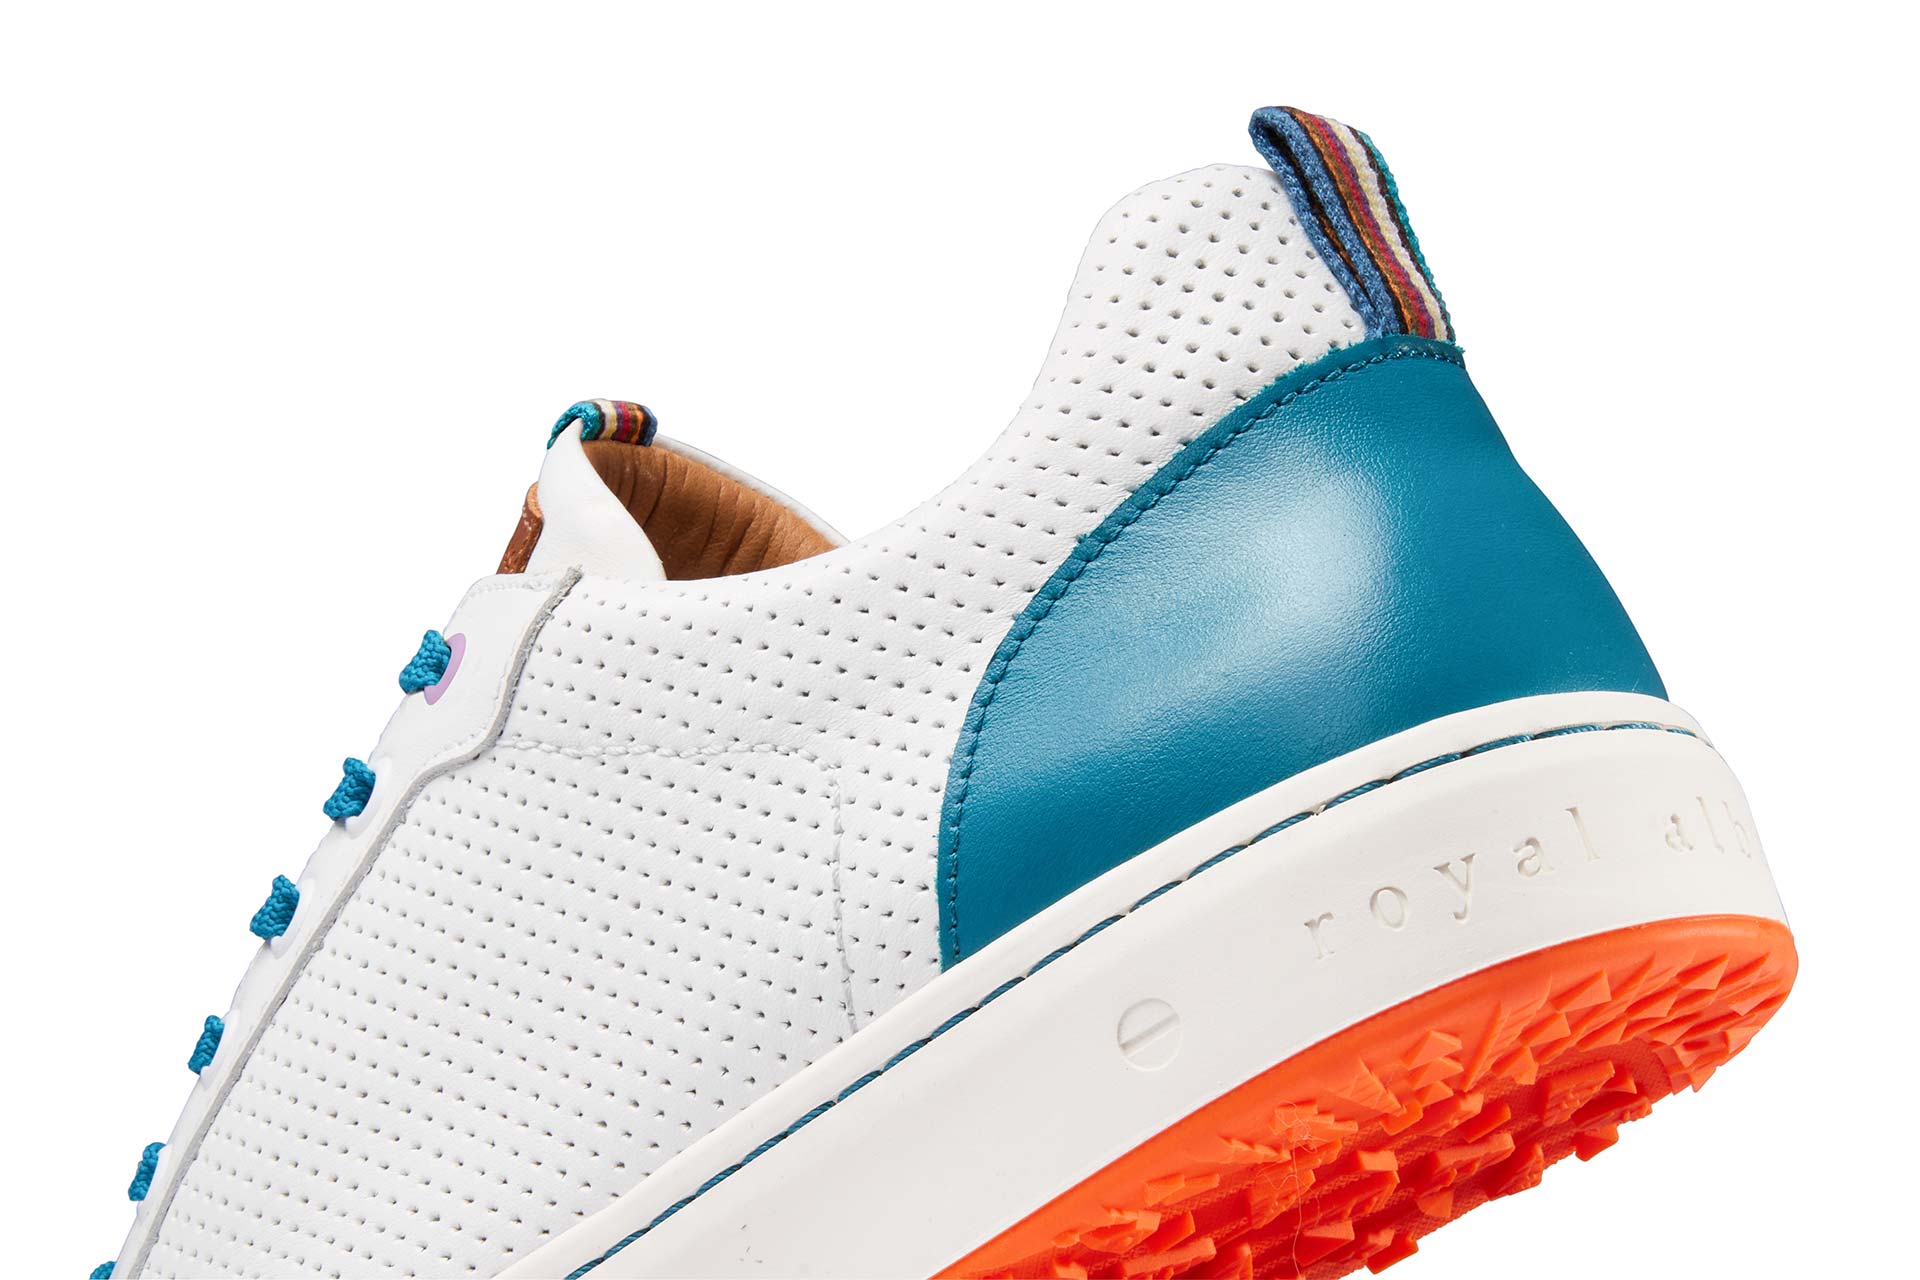 Amalfi White & Teal | Women's golf sneaker | Royal Albartross Amalfi White/Teal